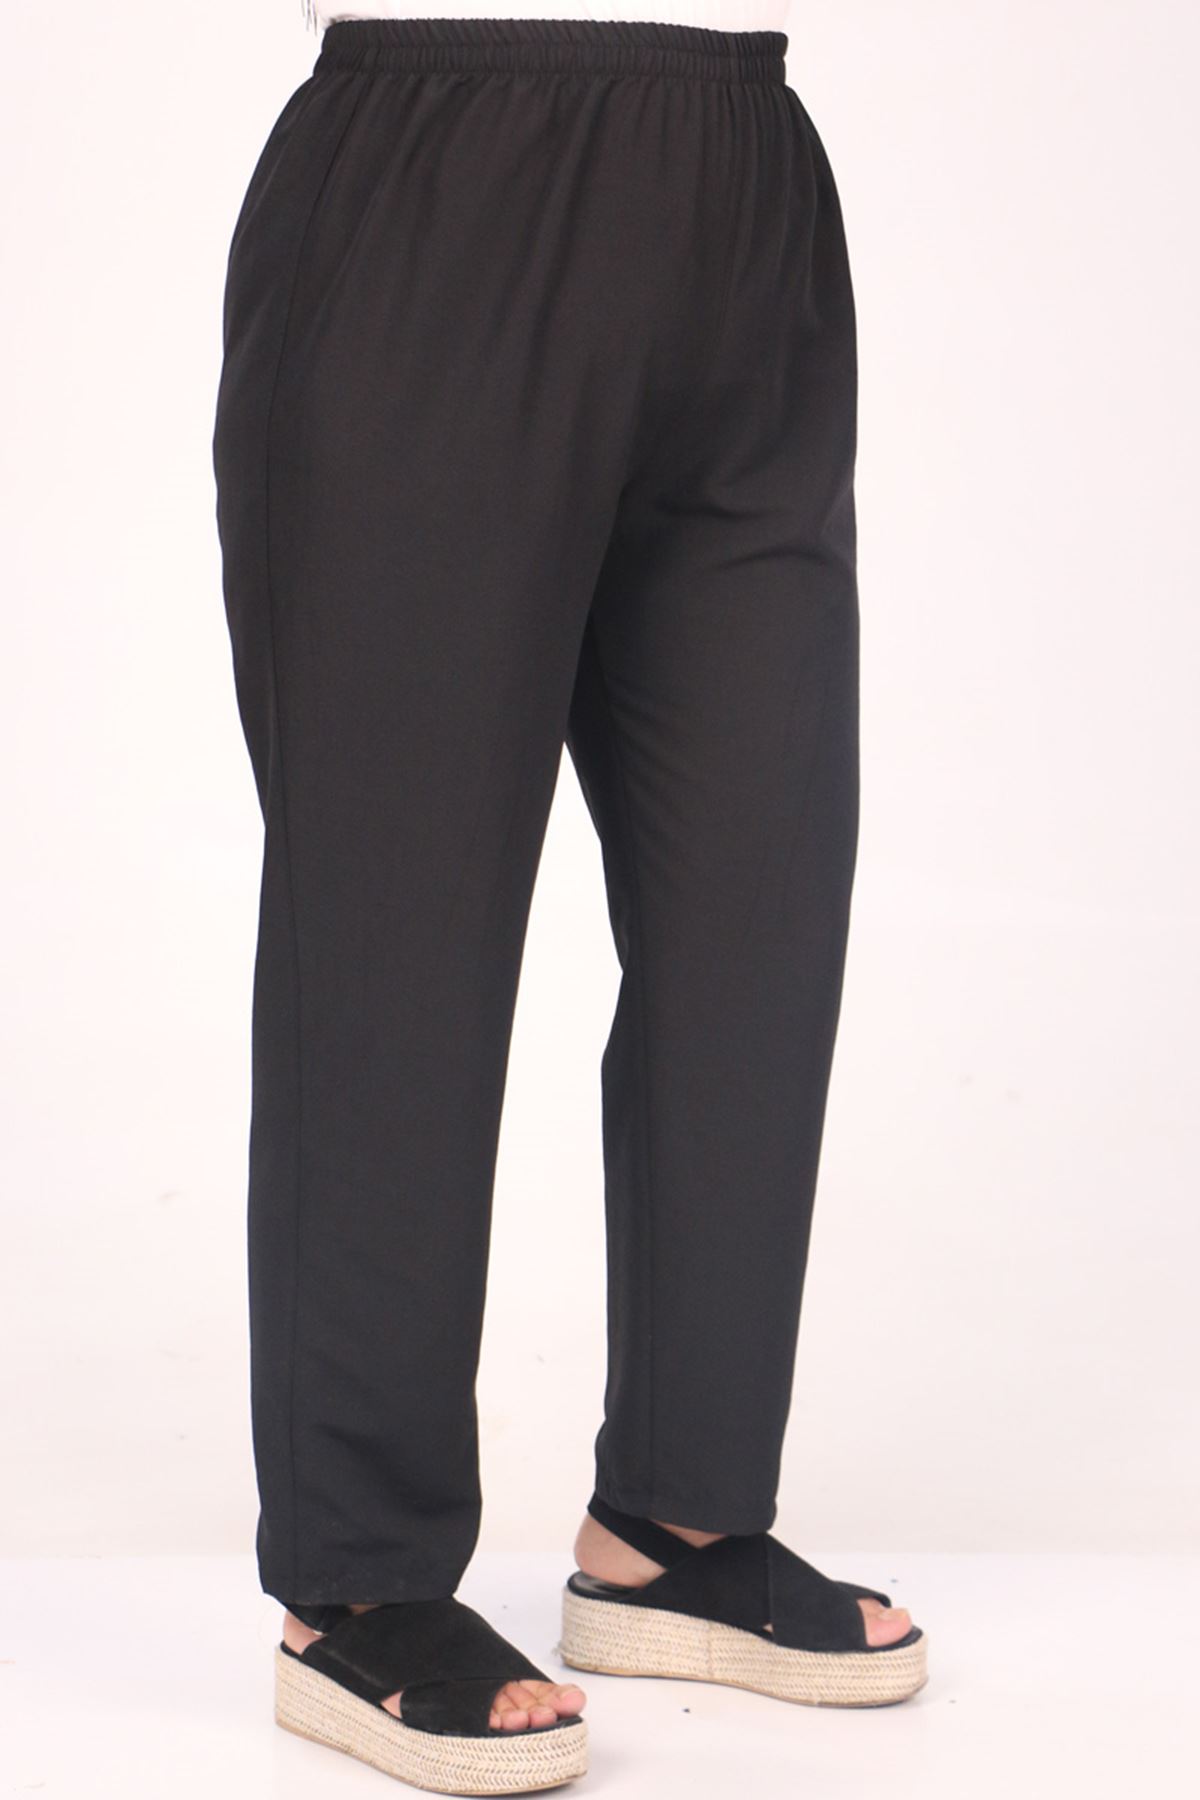 37012 Plus Size Star Airobin Trousers Set - Black